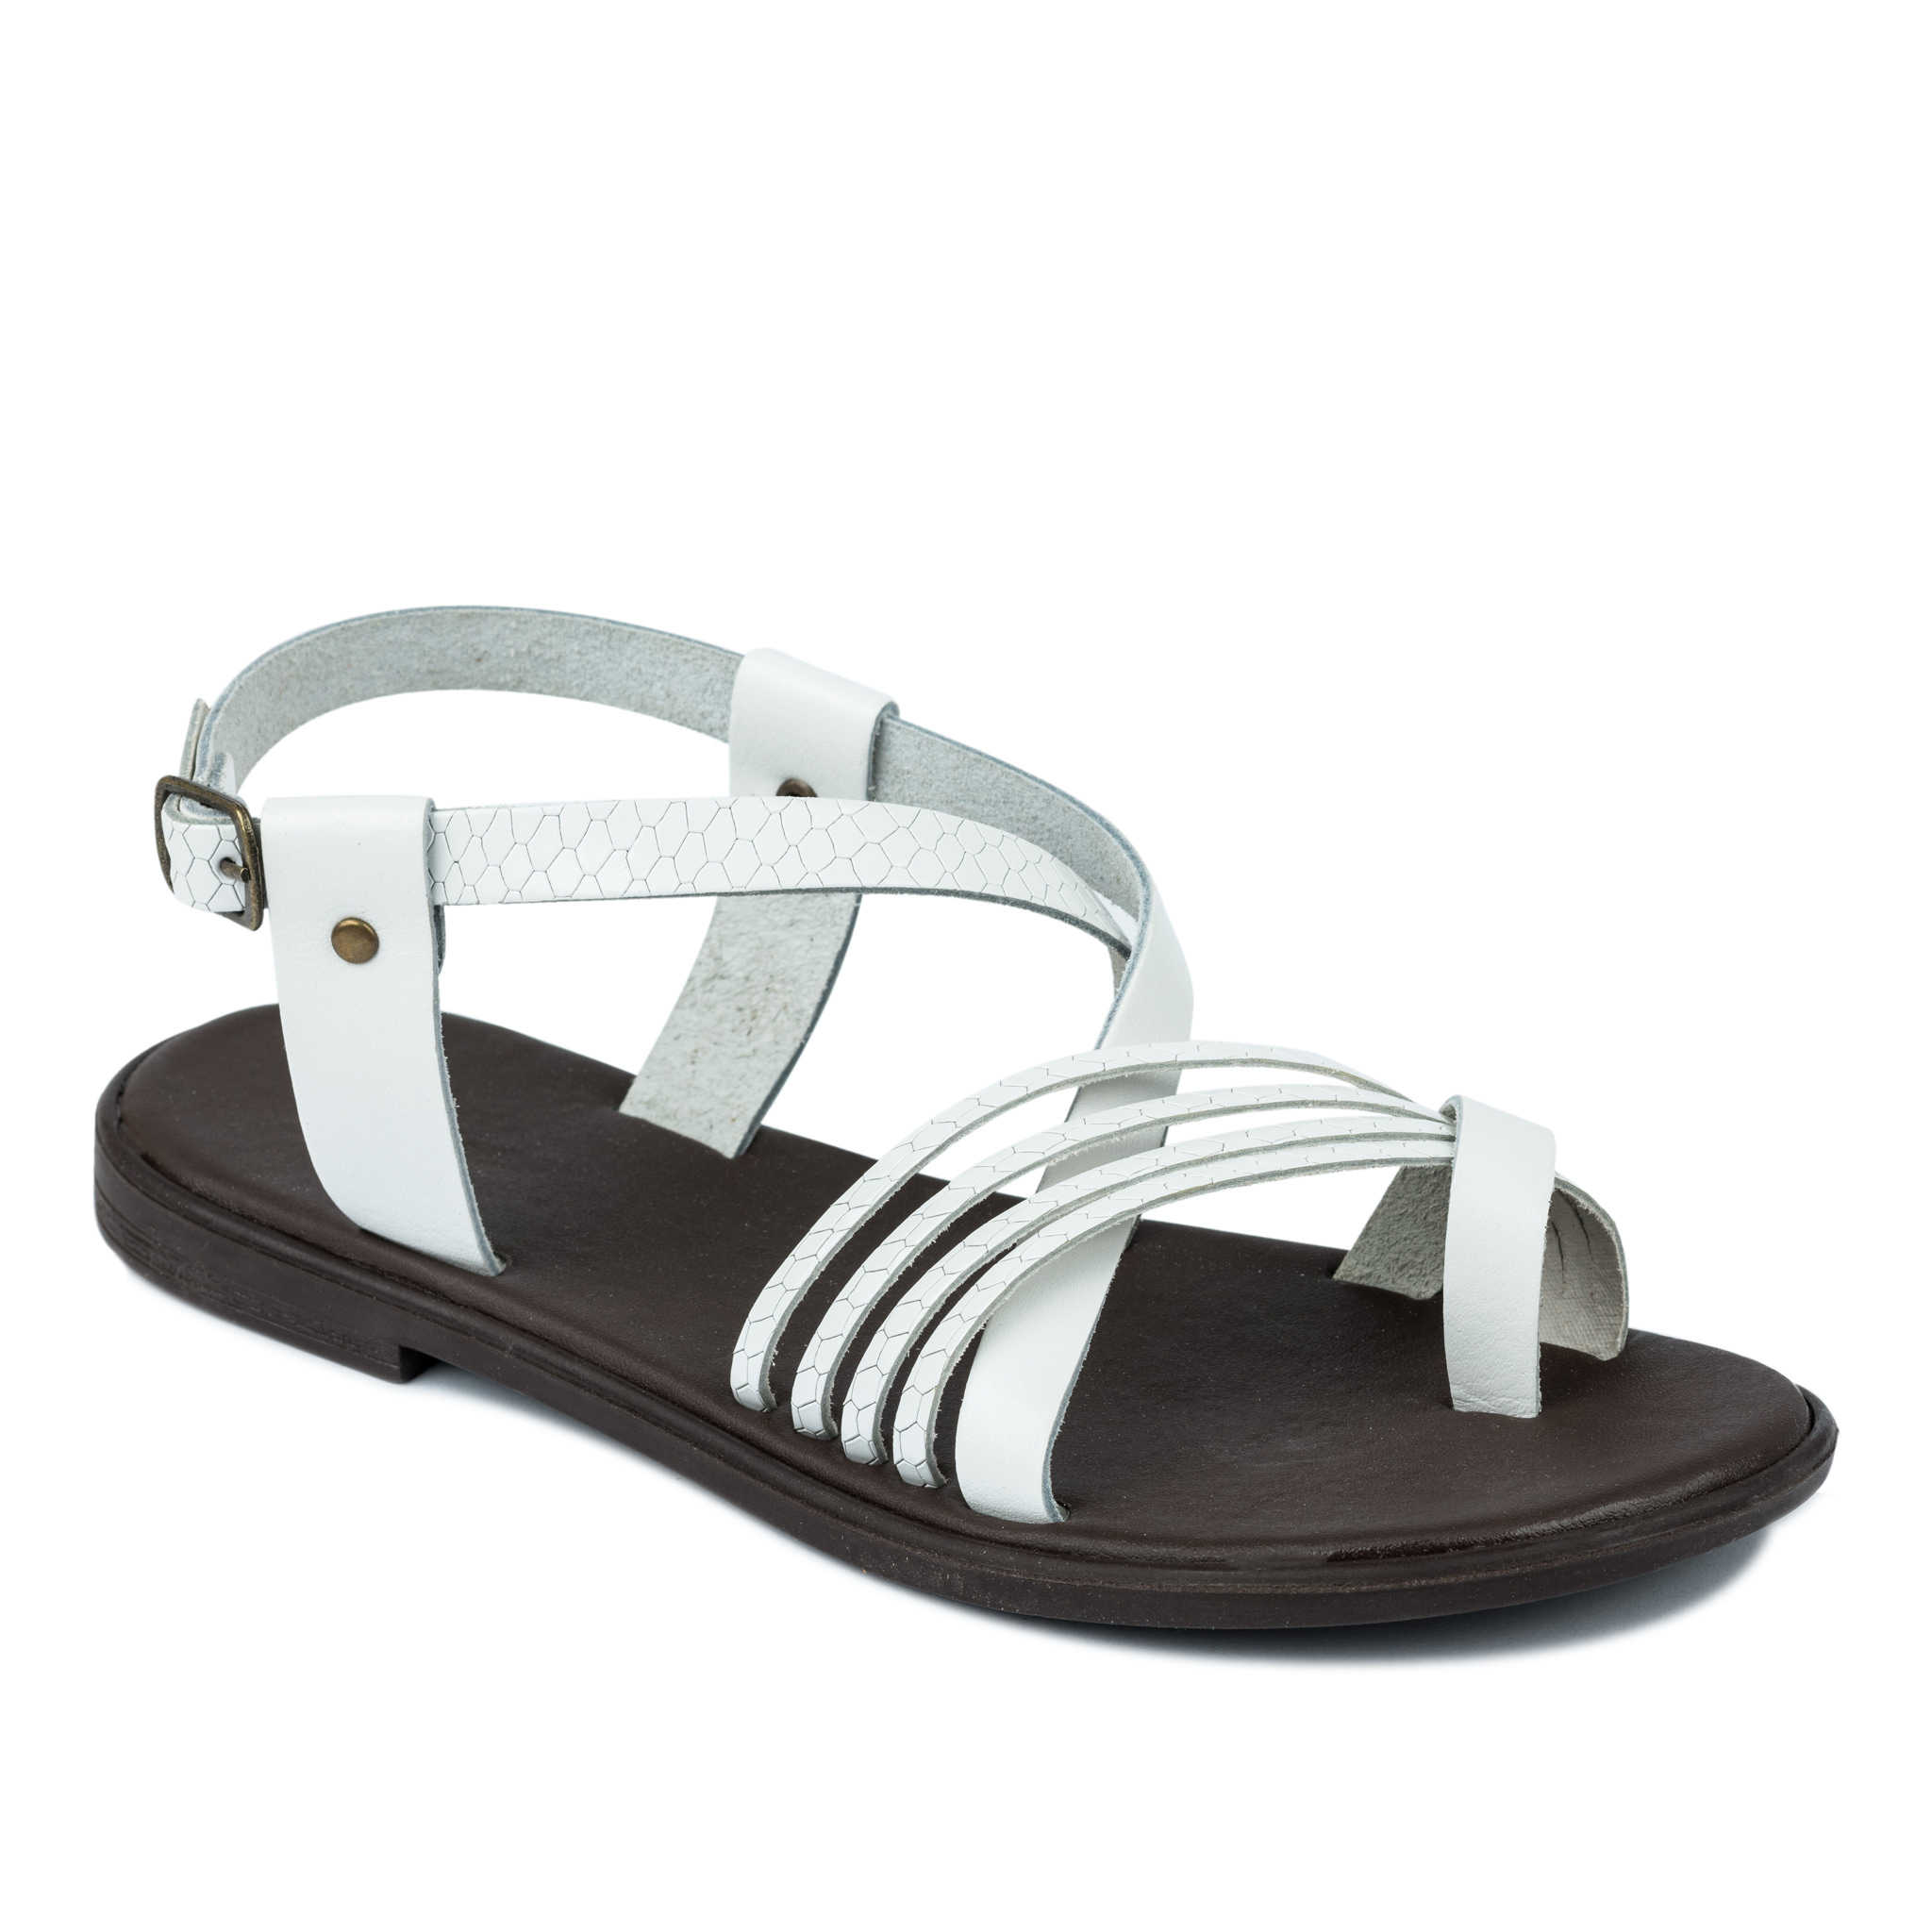 Women sandals A271 - WHITE